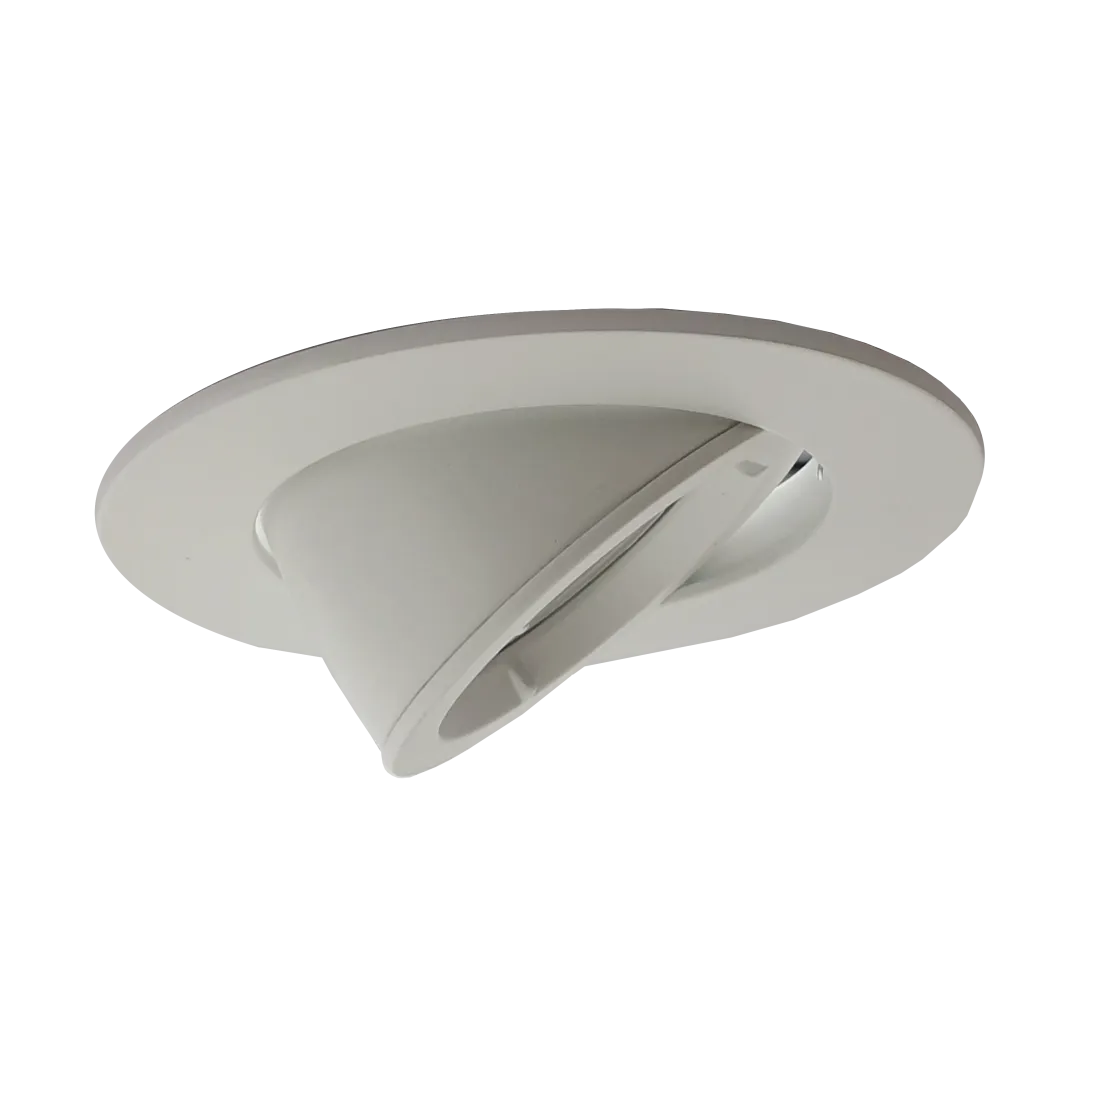 Large Scoop GU10 Ceiling Recessed Tilt Downlight Spotlight White - Light fixtures UK